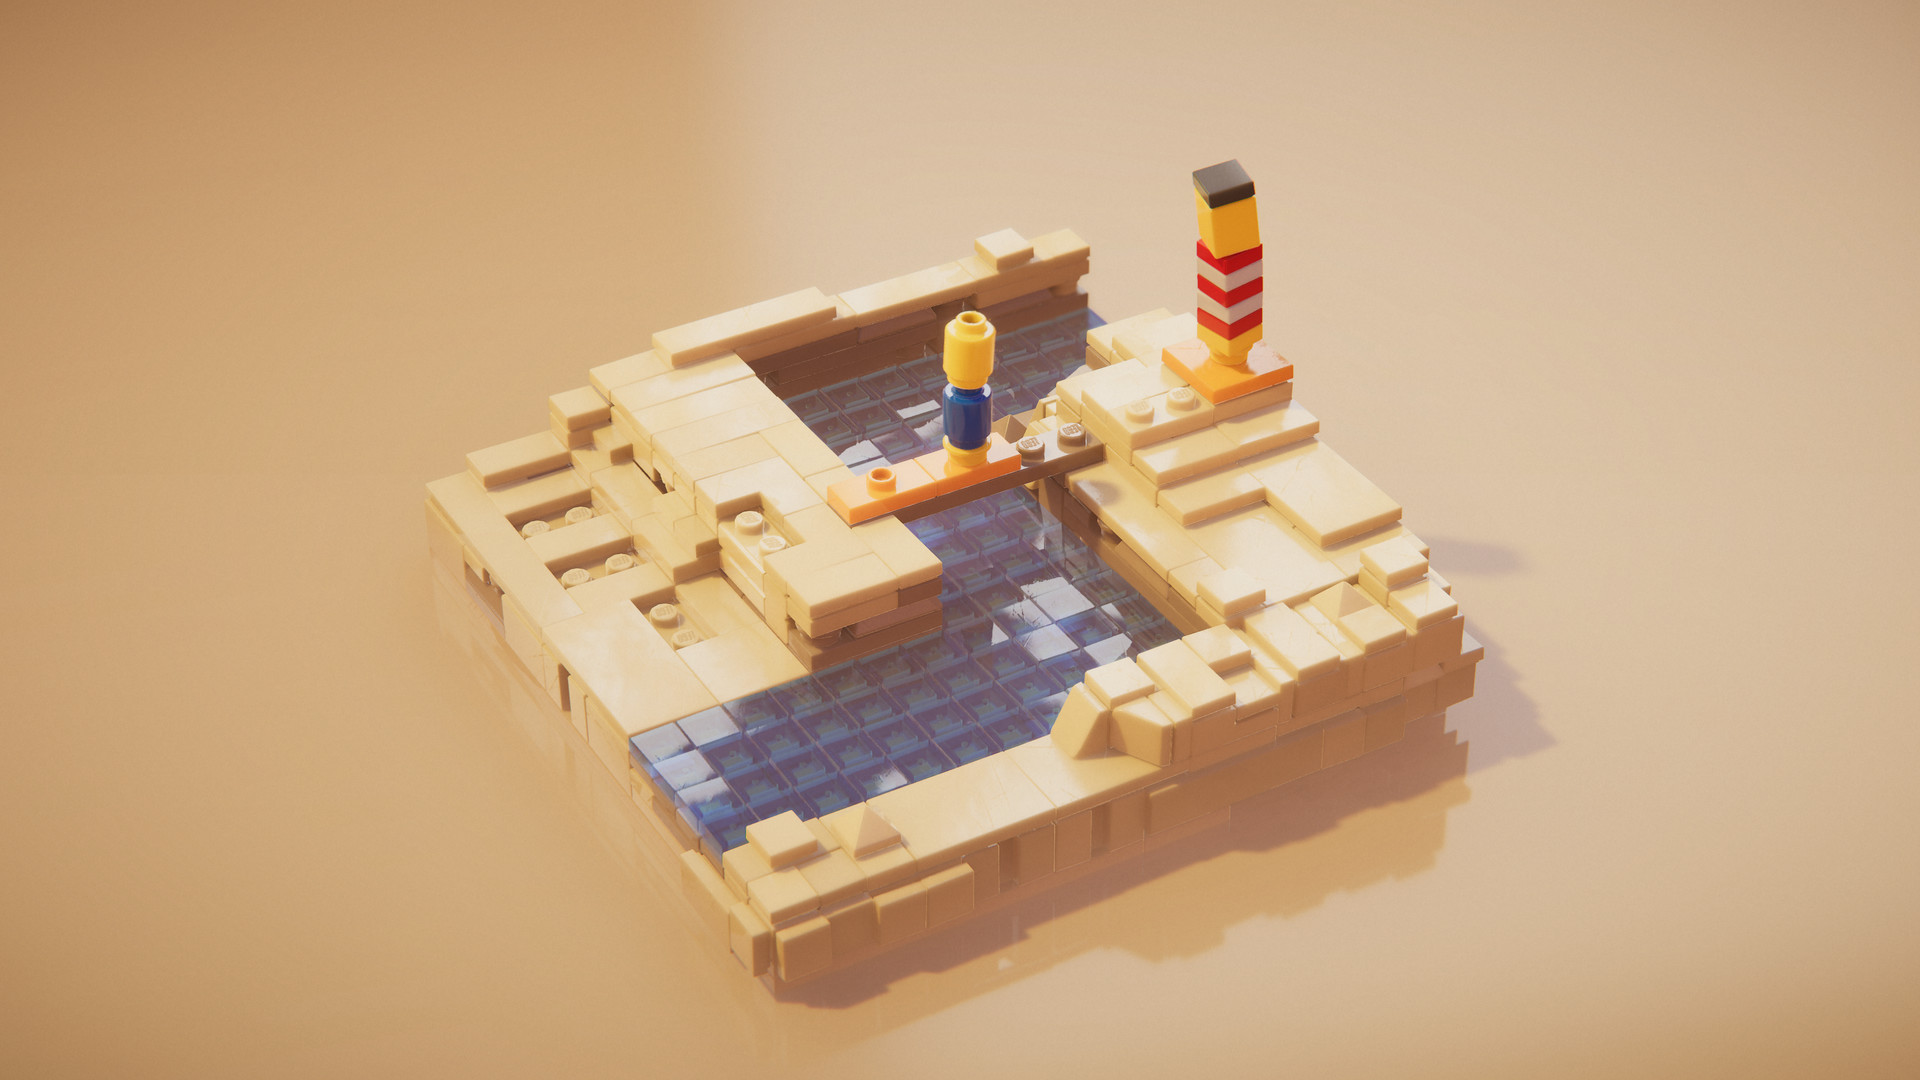 LEGO® Builder's Journey on Steam